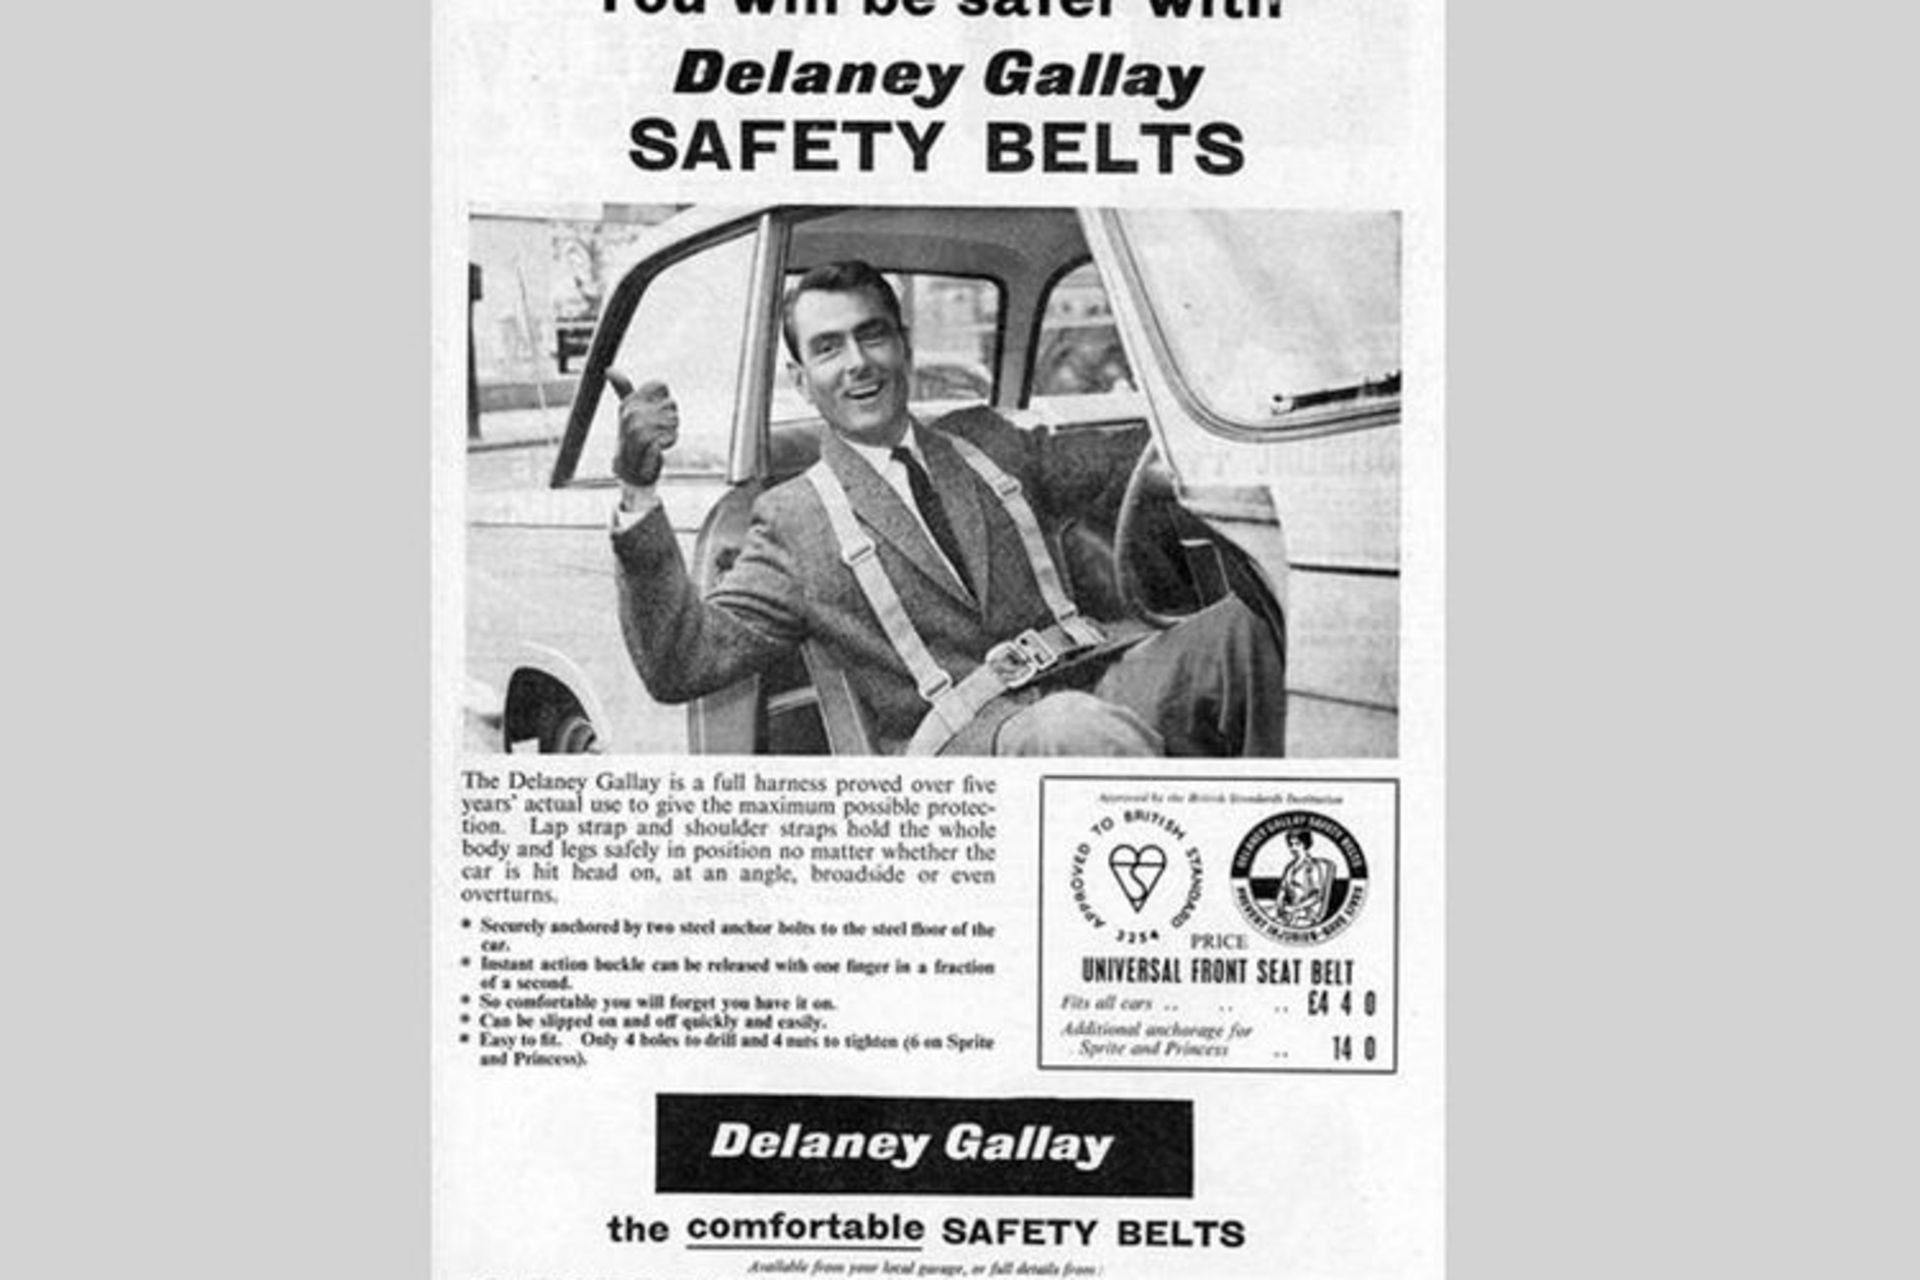 Delaney Galley seatbelts